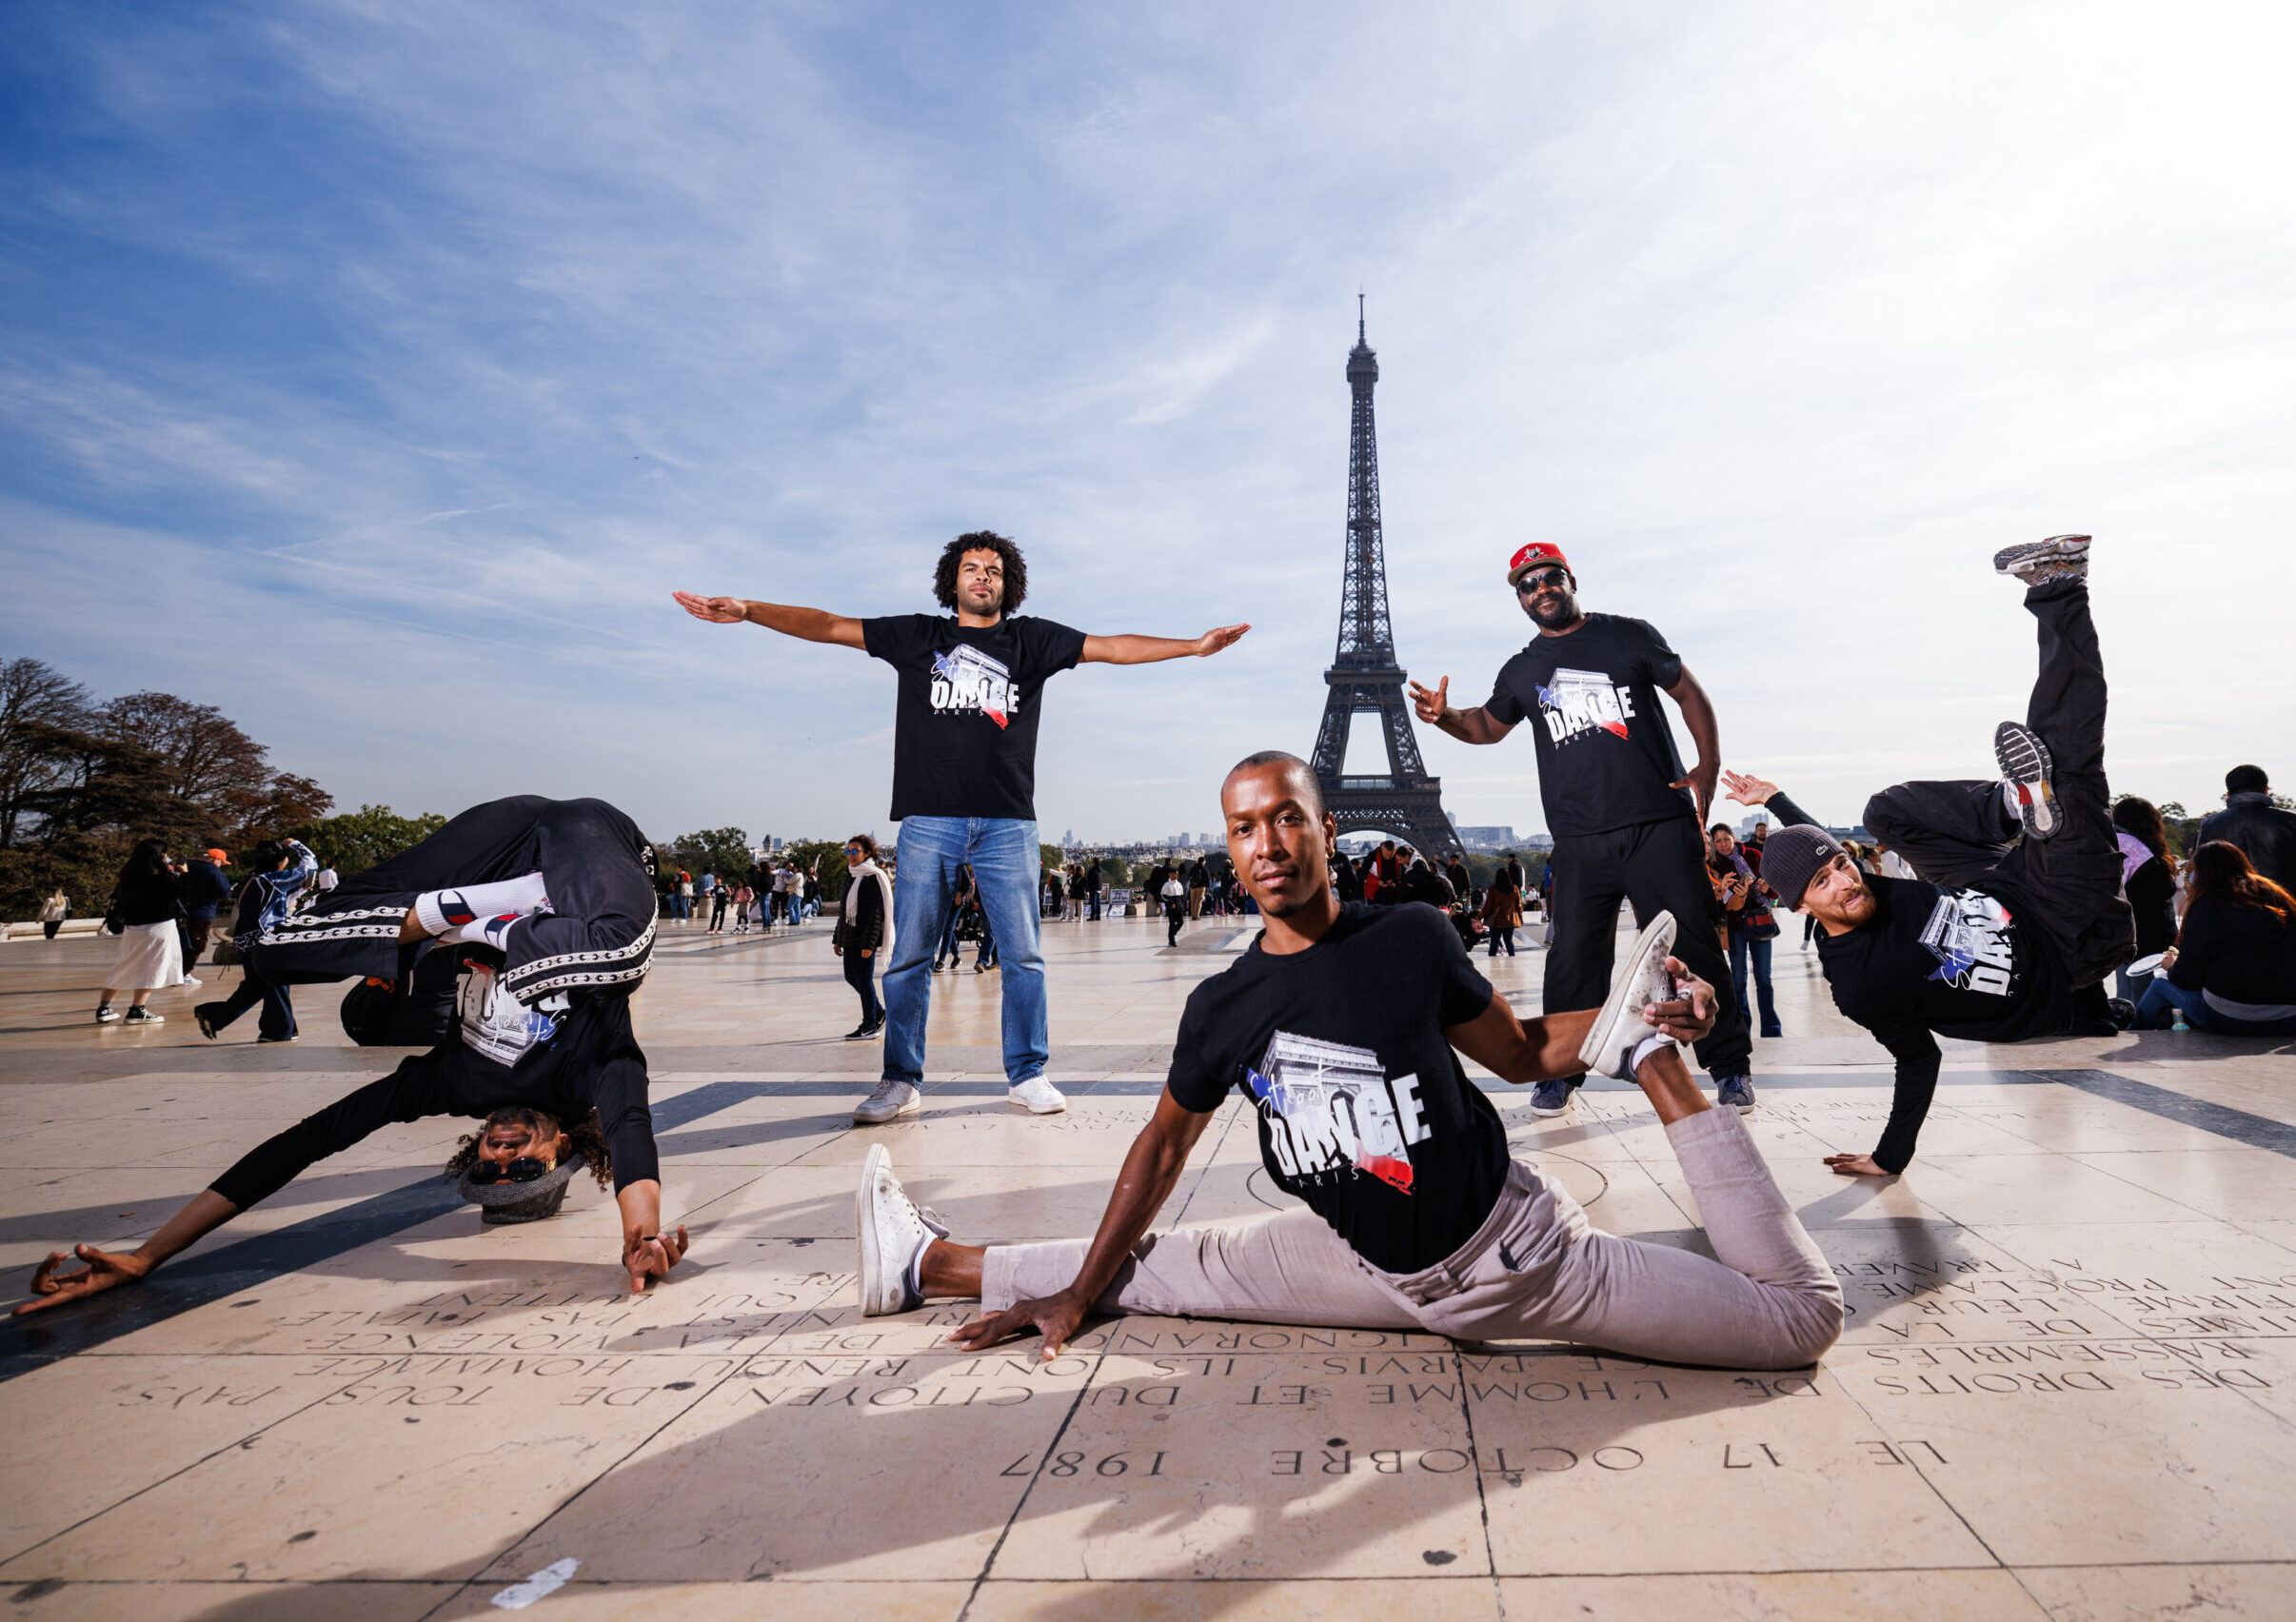 Street Dance Paris members in front of Eiffel Tower